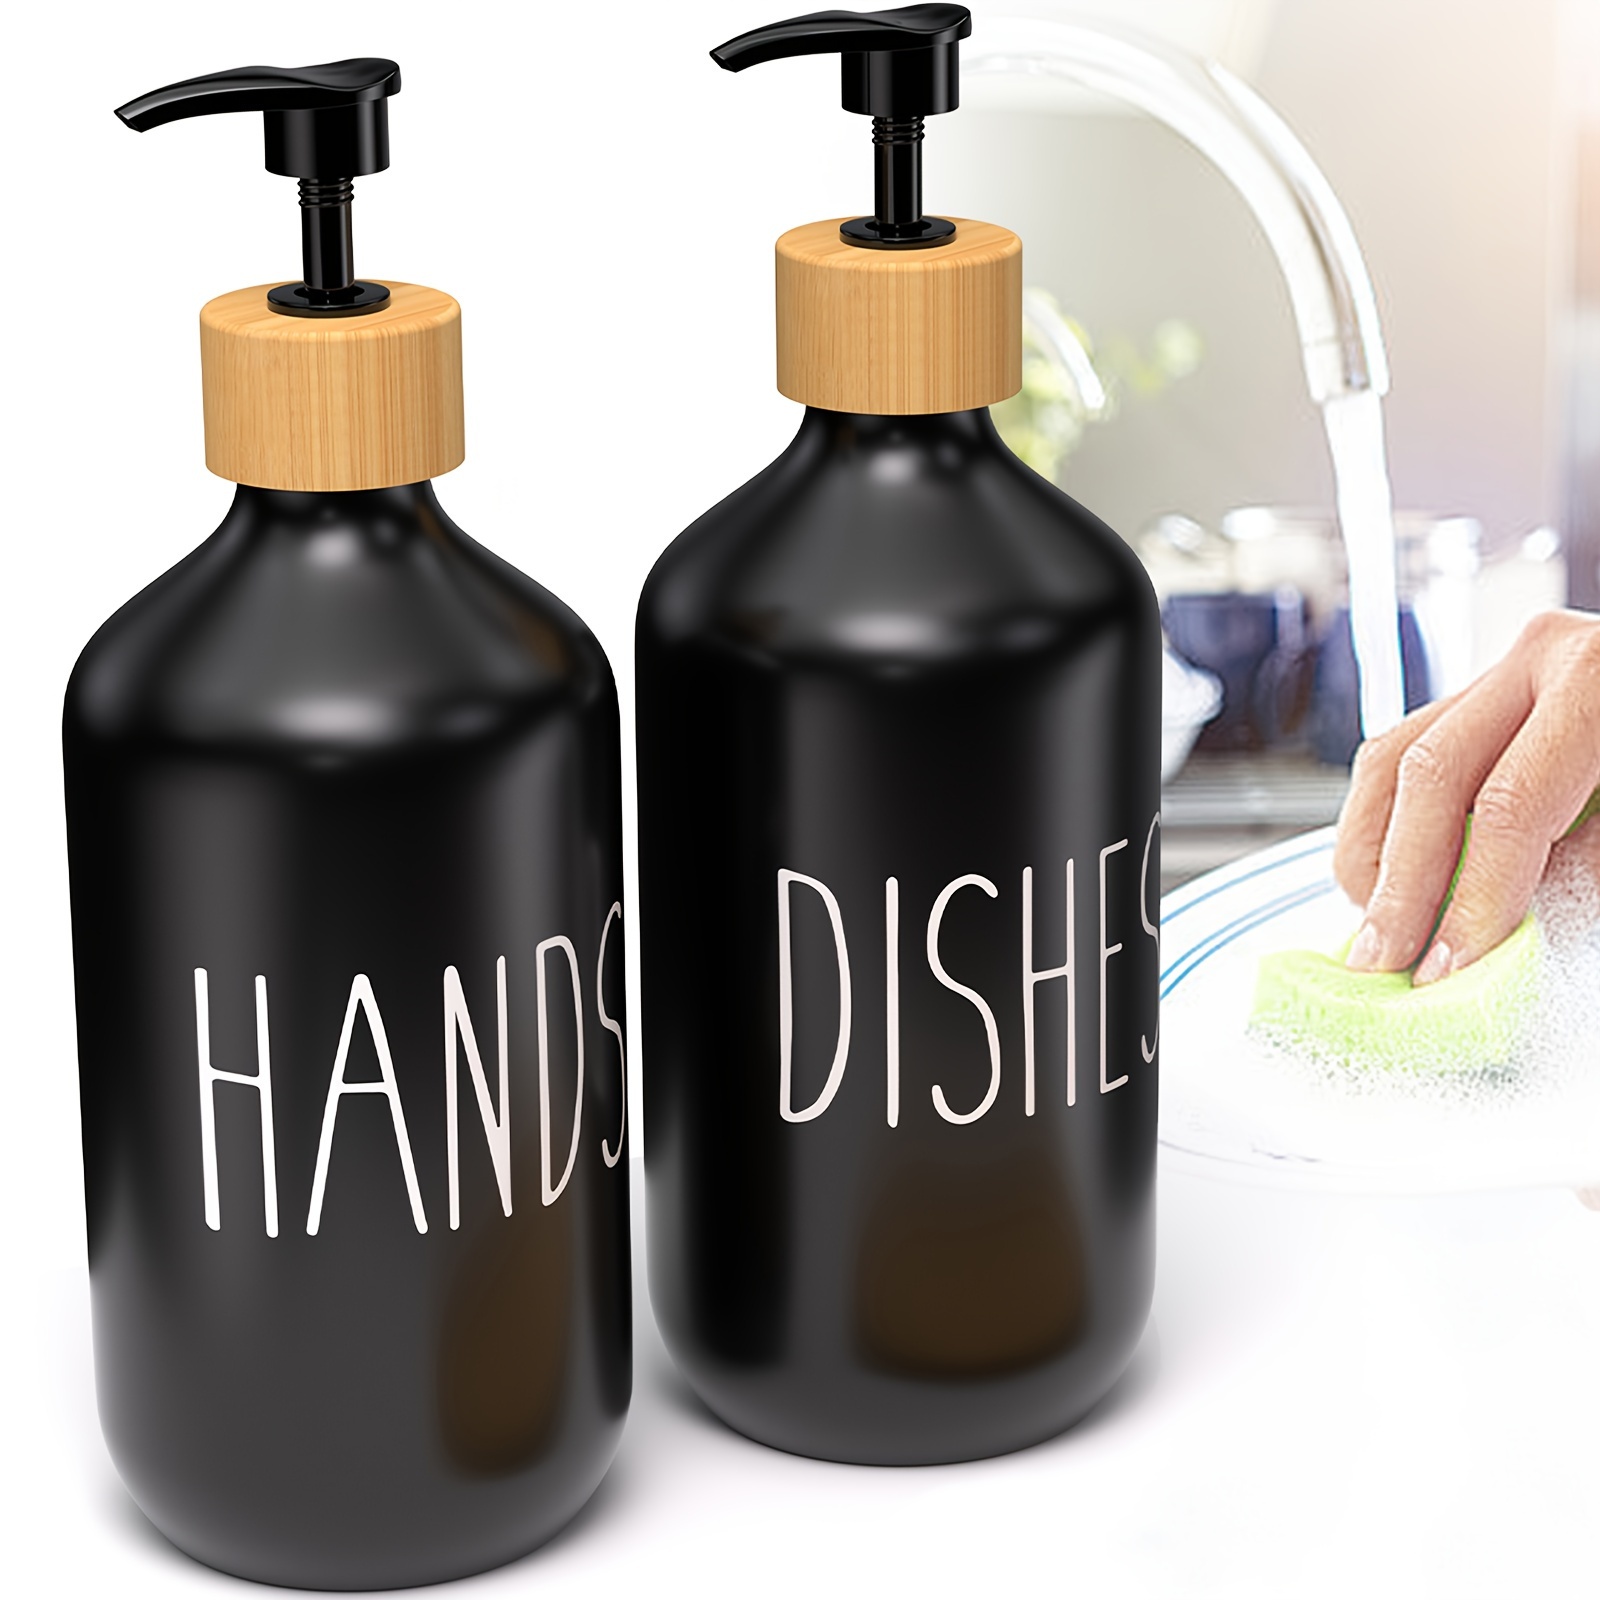 

2pcs Black Plastic Soap Dispenser Set - Hand And Dish Soap Dispensers, Lotion Bottles With Pump Suitable For Kitchen Bathroom Washroom, Bathroom Accessories